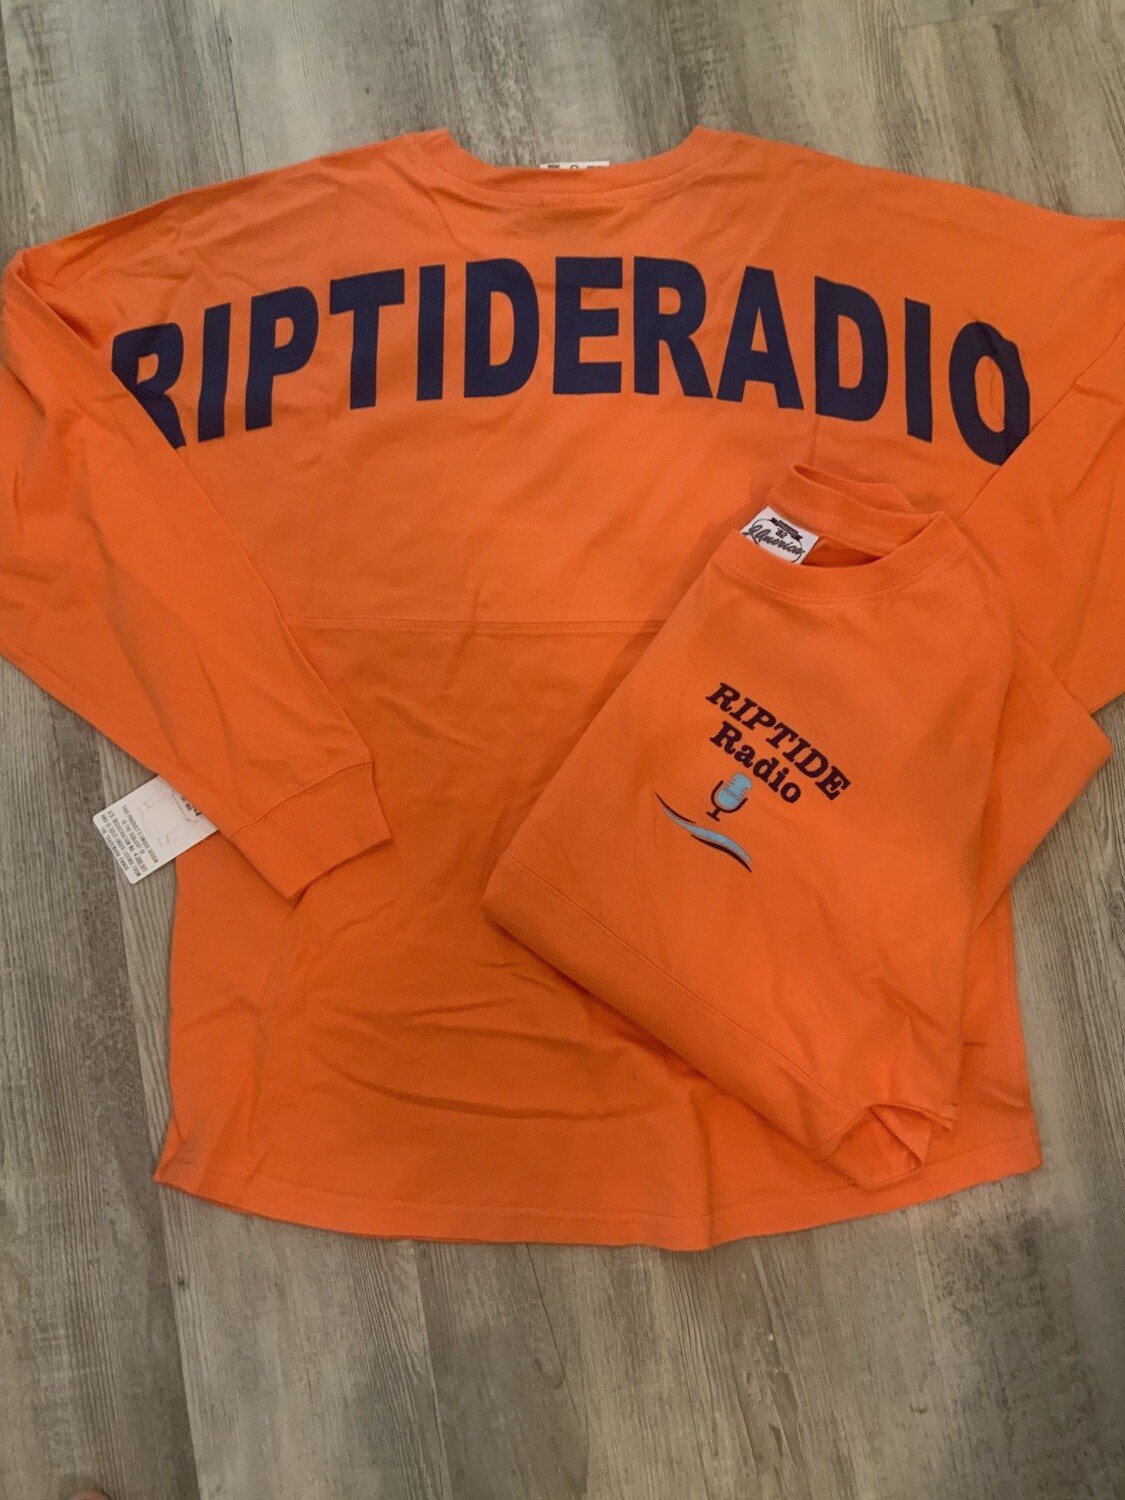 Riptide Radio Oversize Jerseys